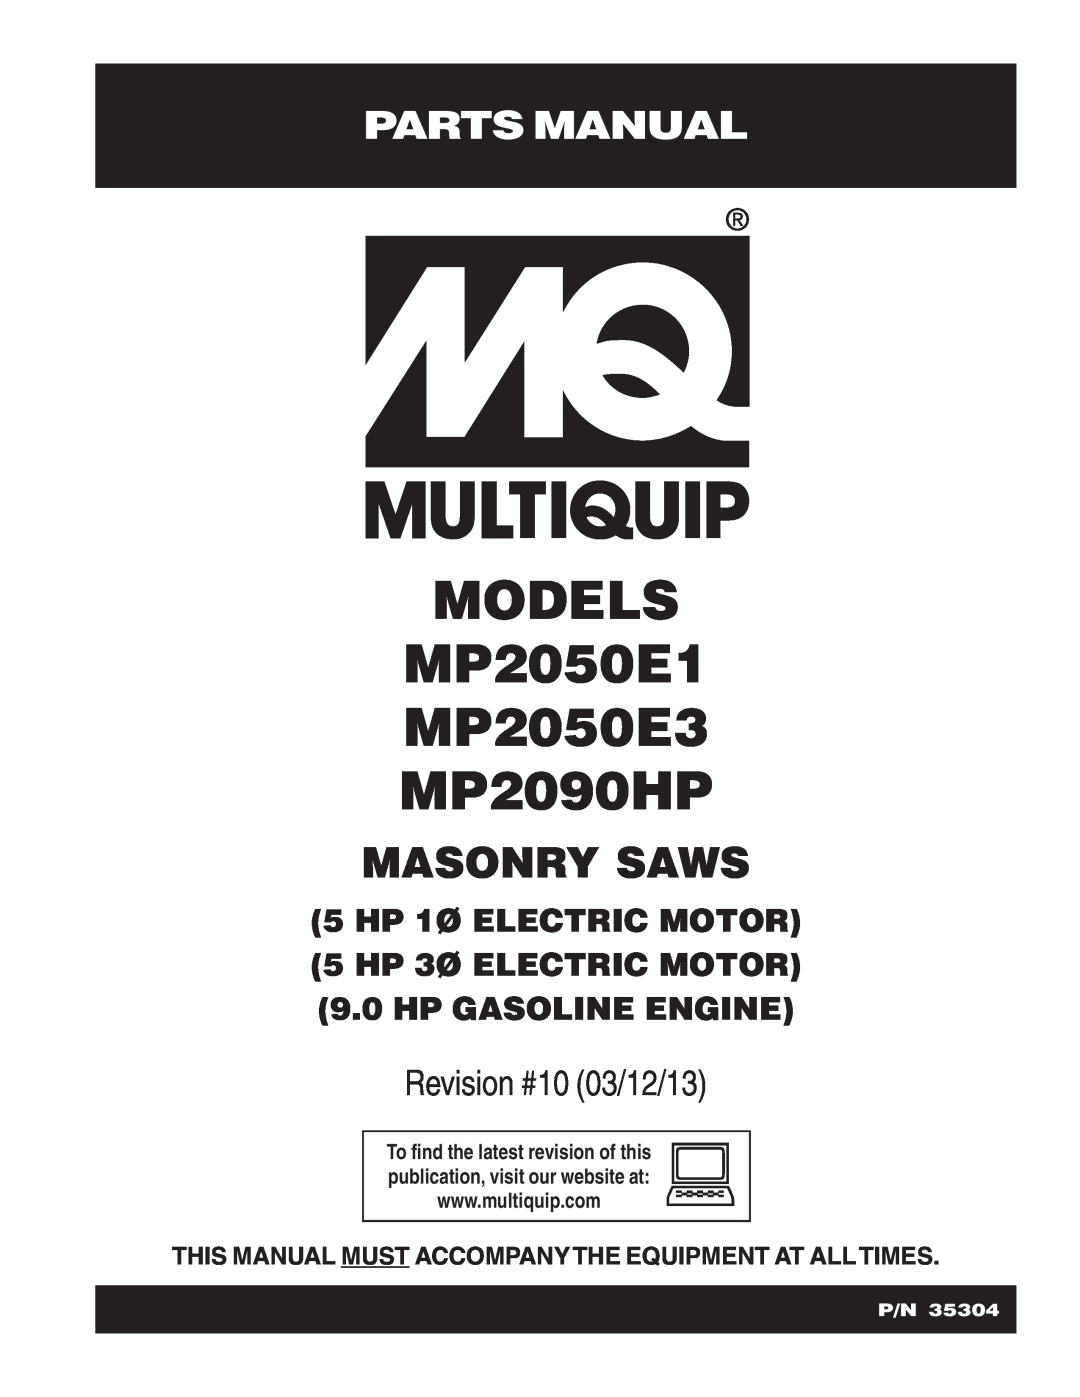 Multiquip MP2050E3 manual Parts Manual, 5 HP 1Ø ELECTRIC MOTOR 5 HP 3Ø ELECTRIC MOTOR 9.0 HP GASOLINE ENGINE, Masonry Saws 